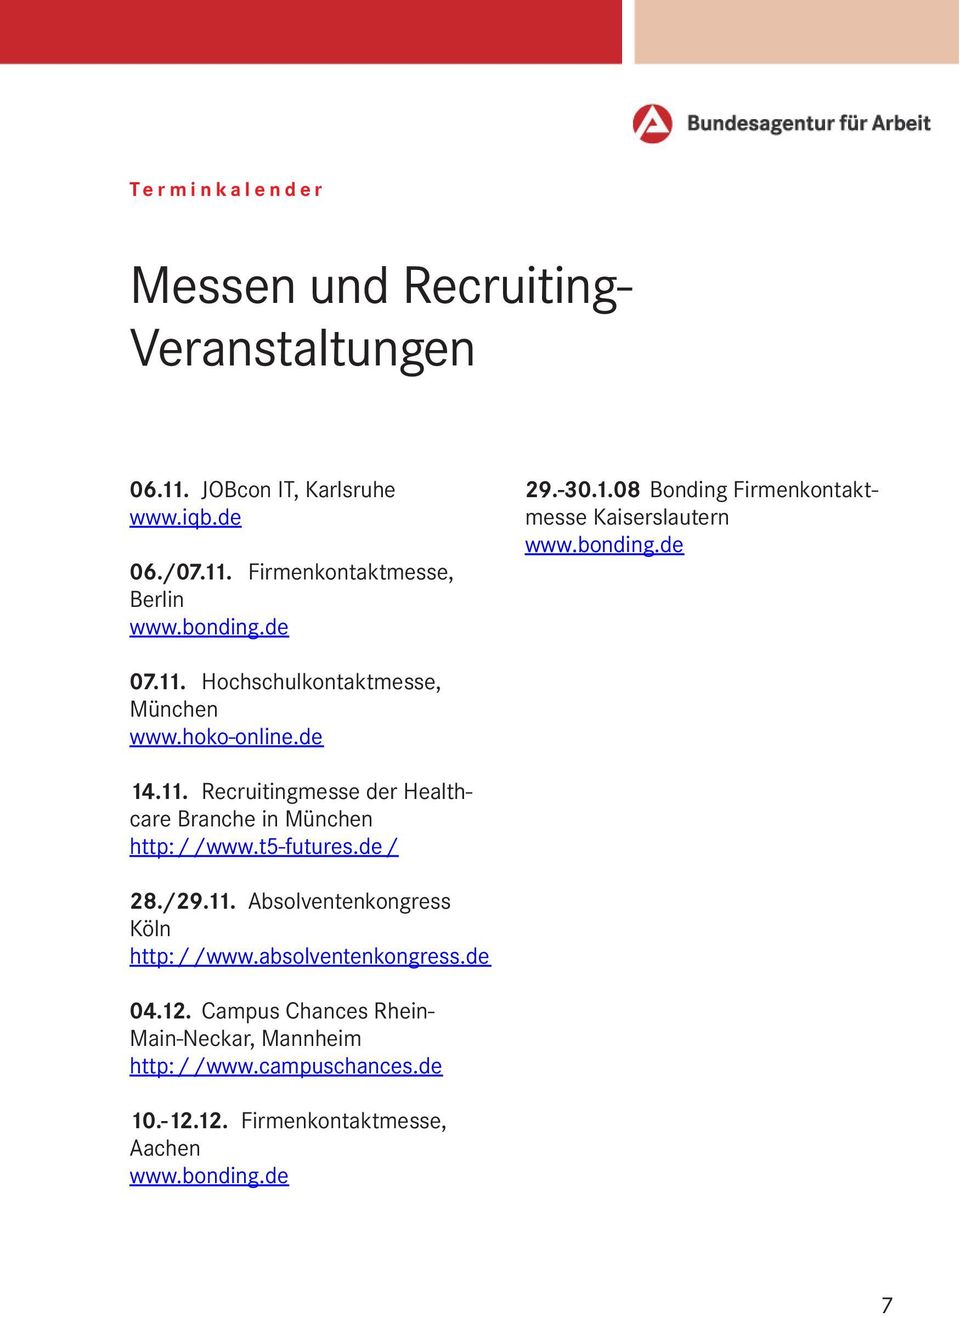 11. Recruitingmesse der Healthcare Branche in München http://www.t5-futures.de/ 28./29.11. Absolventenkongress Köln http://www.